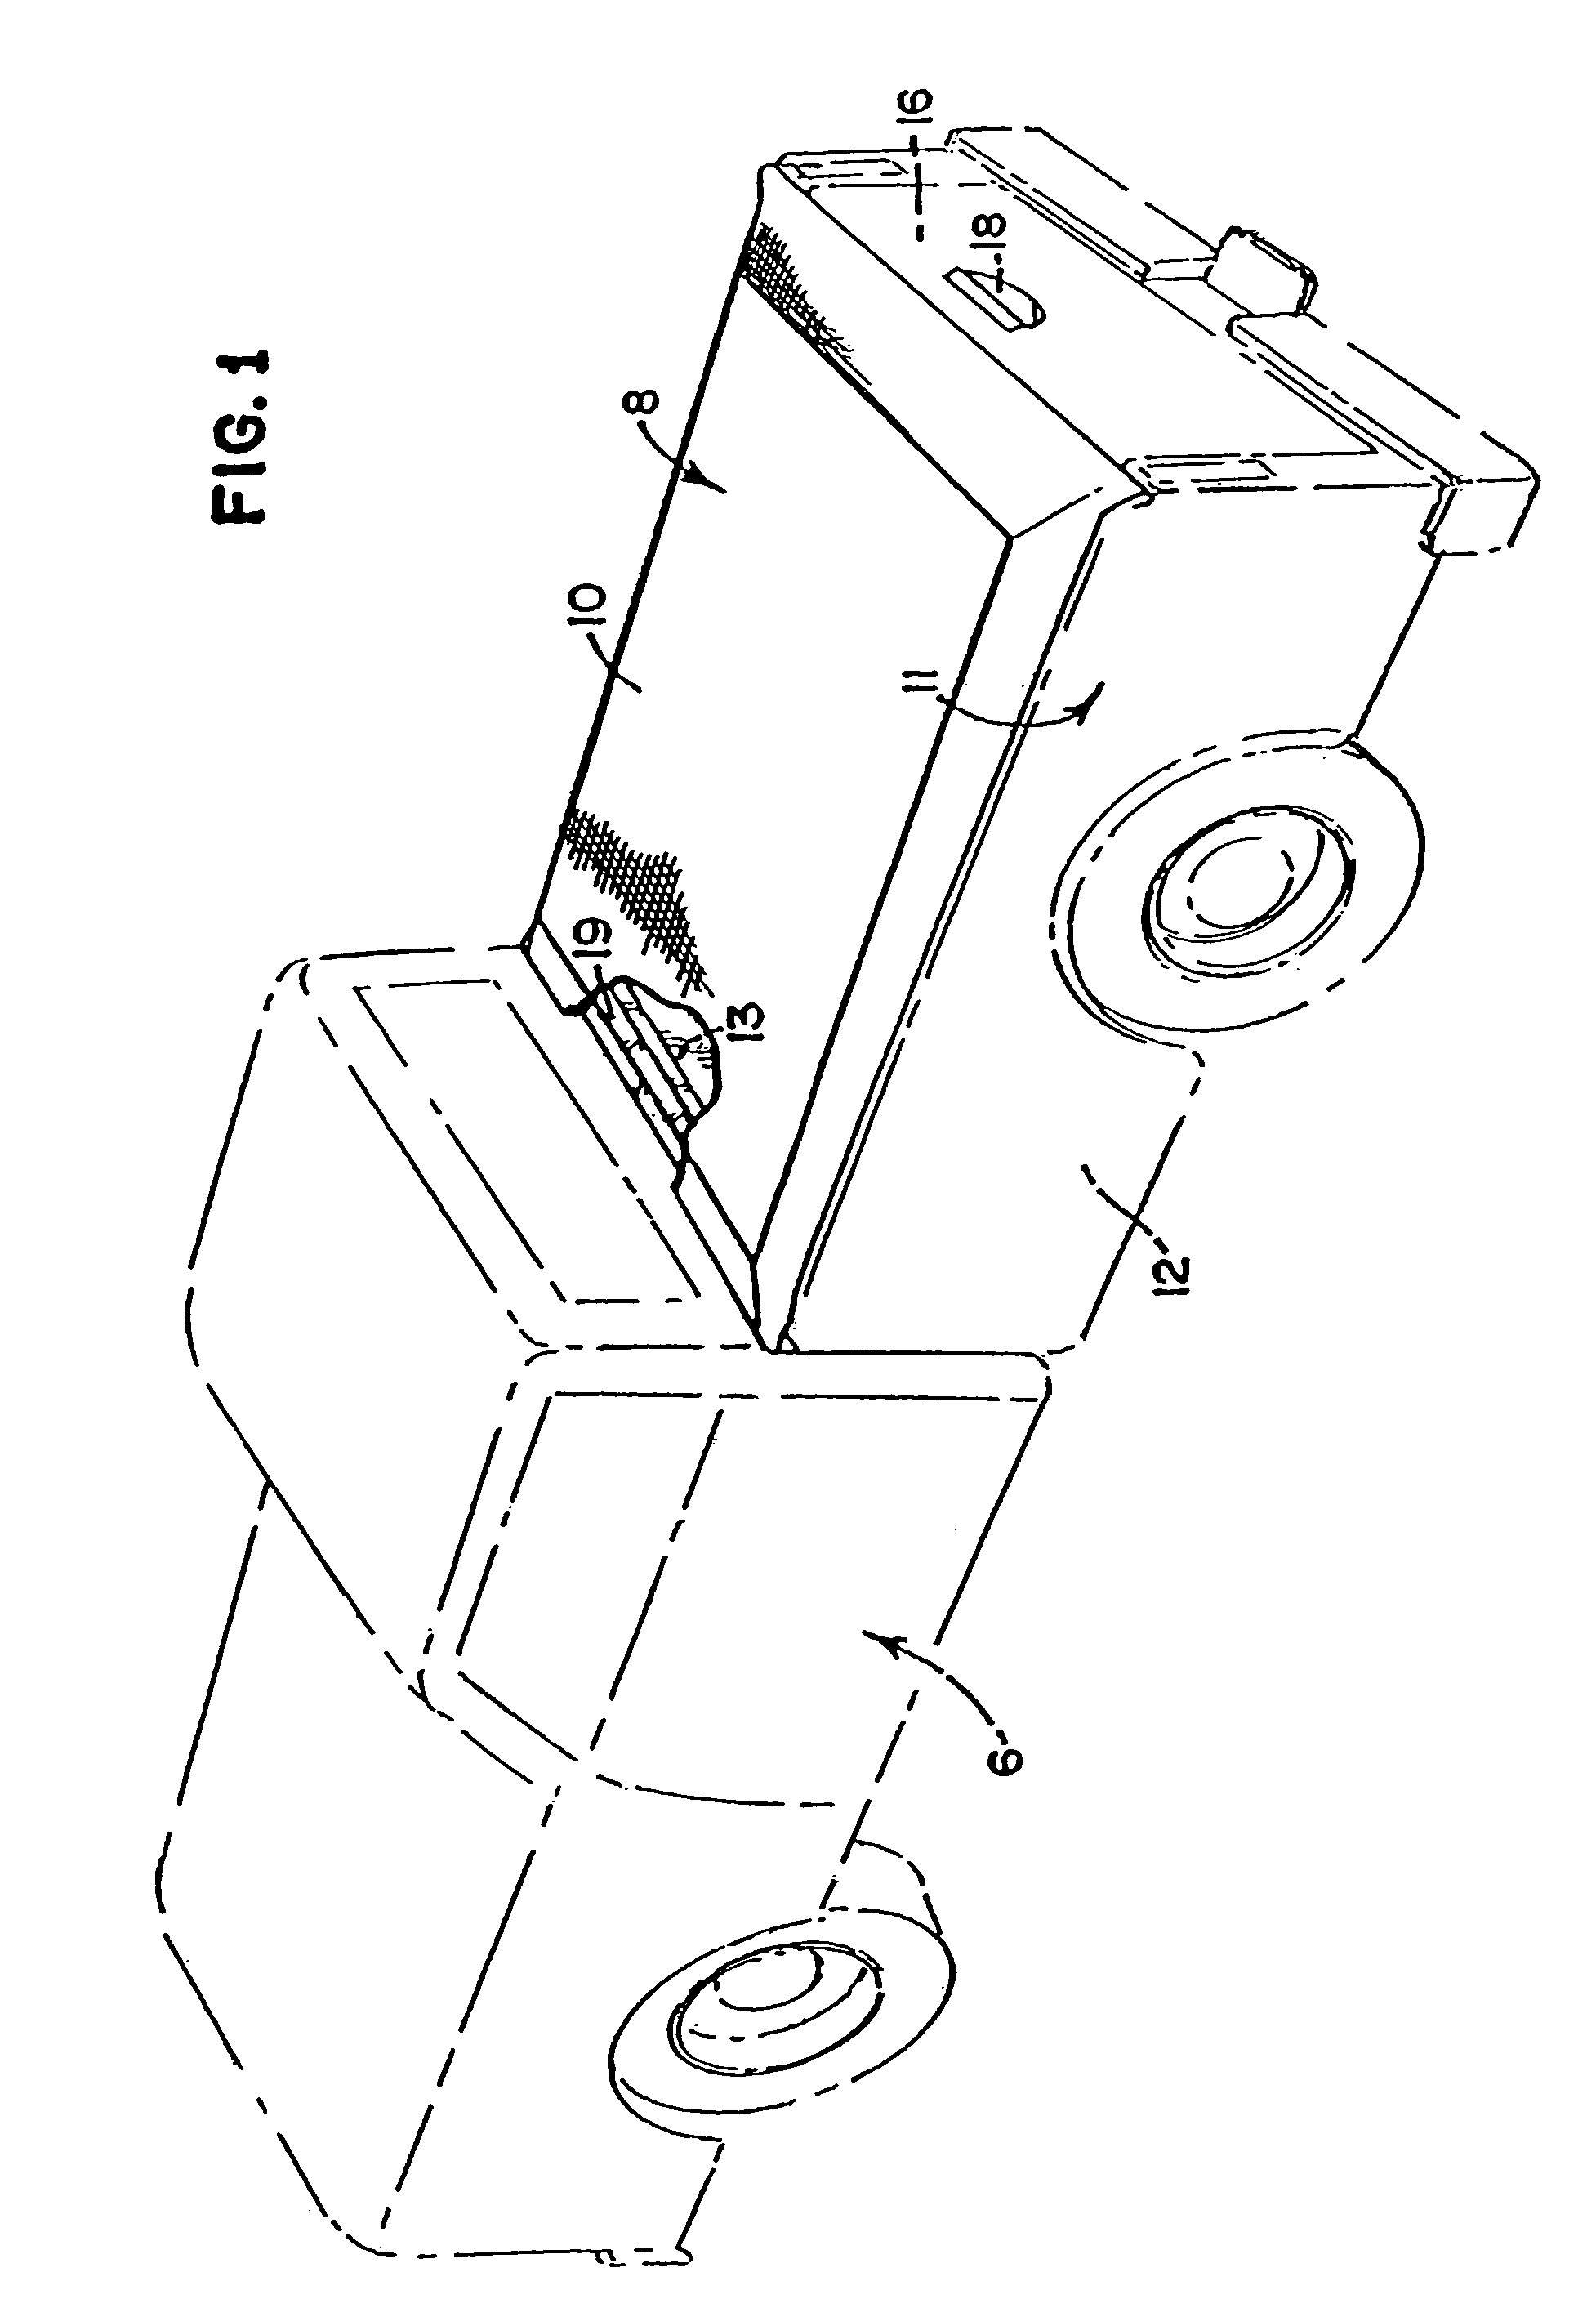 Tonneau cover with turn knob for rear bar locks